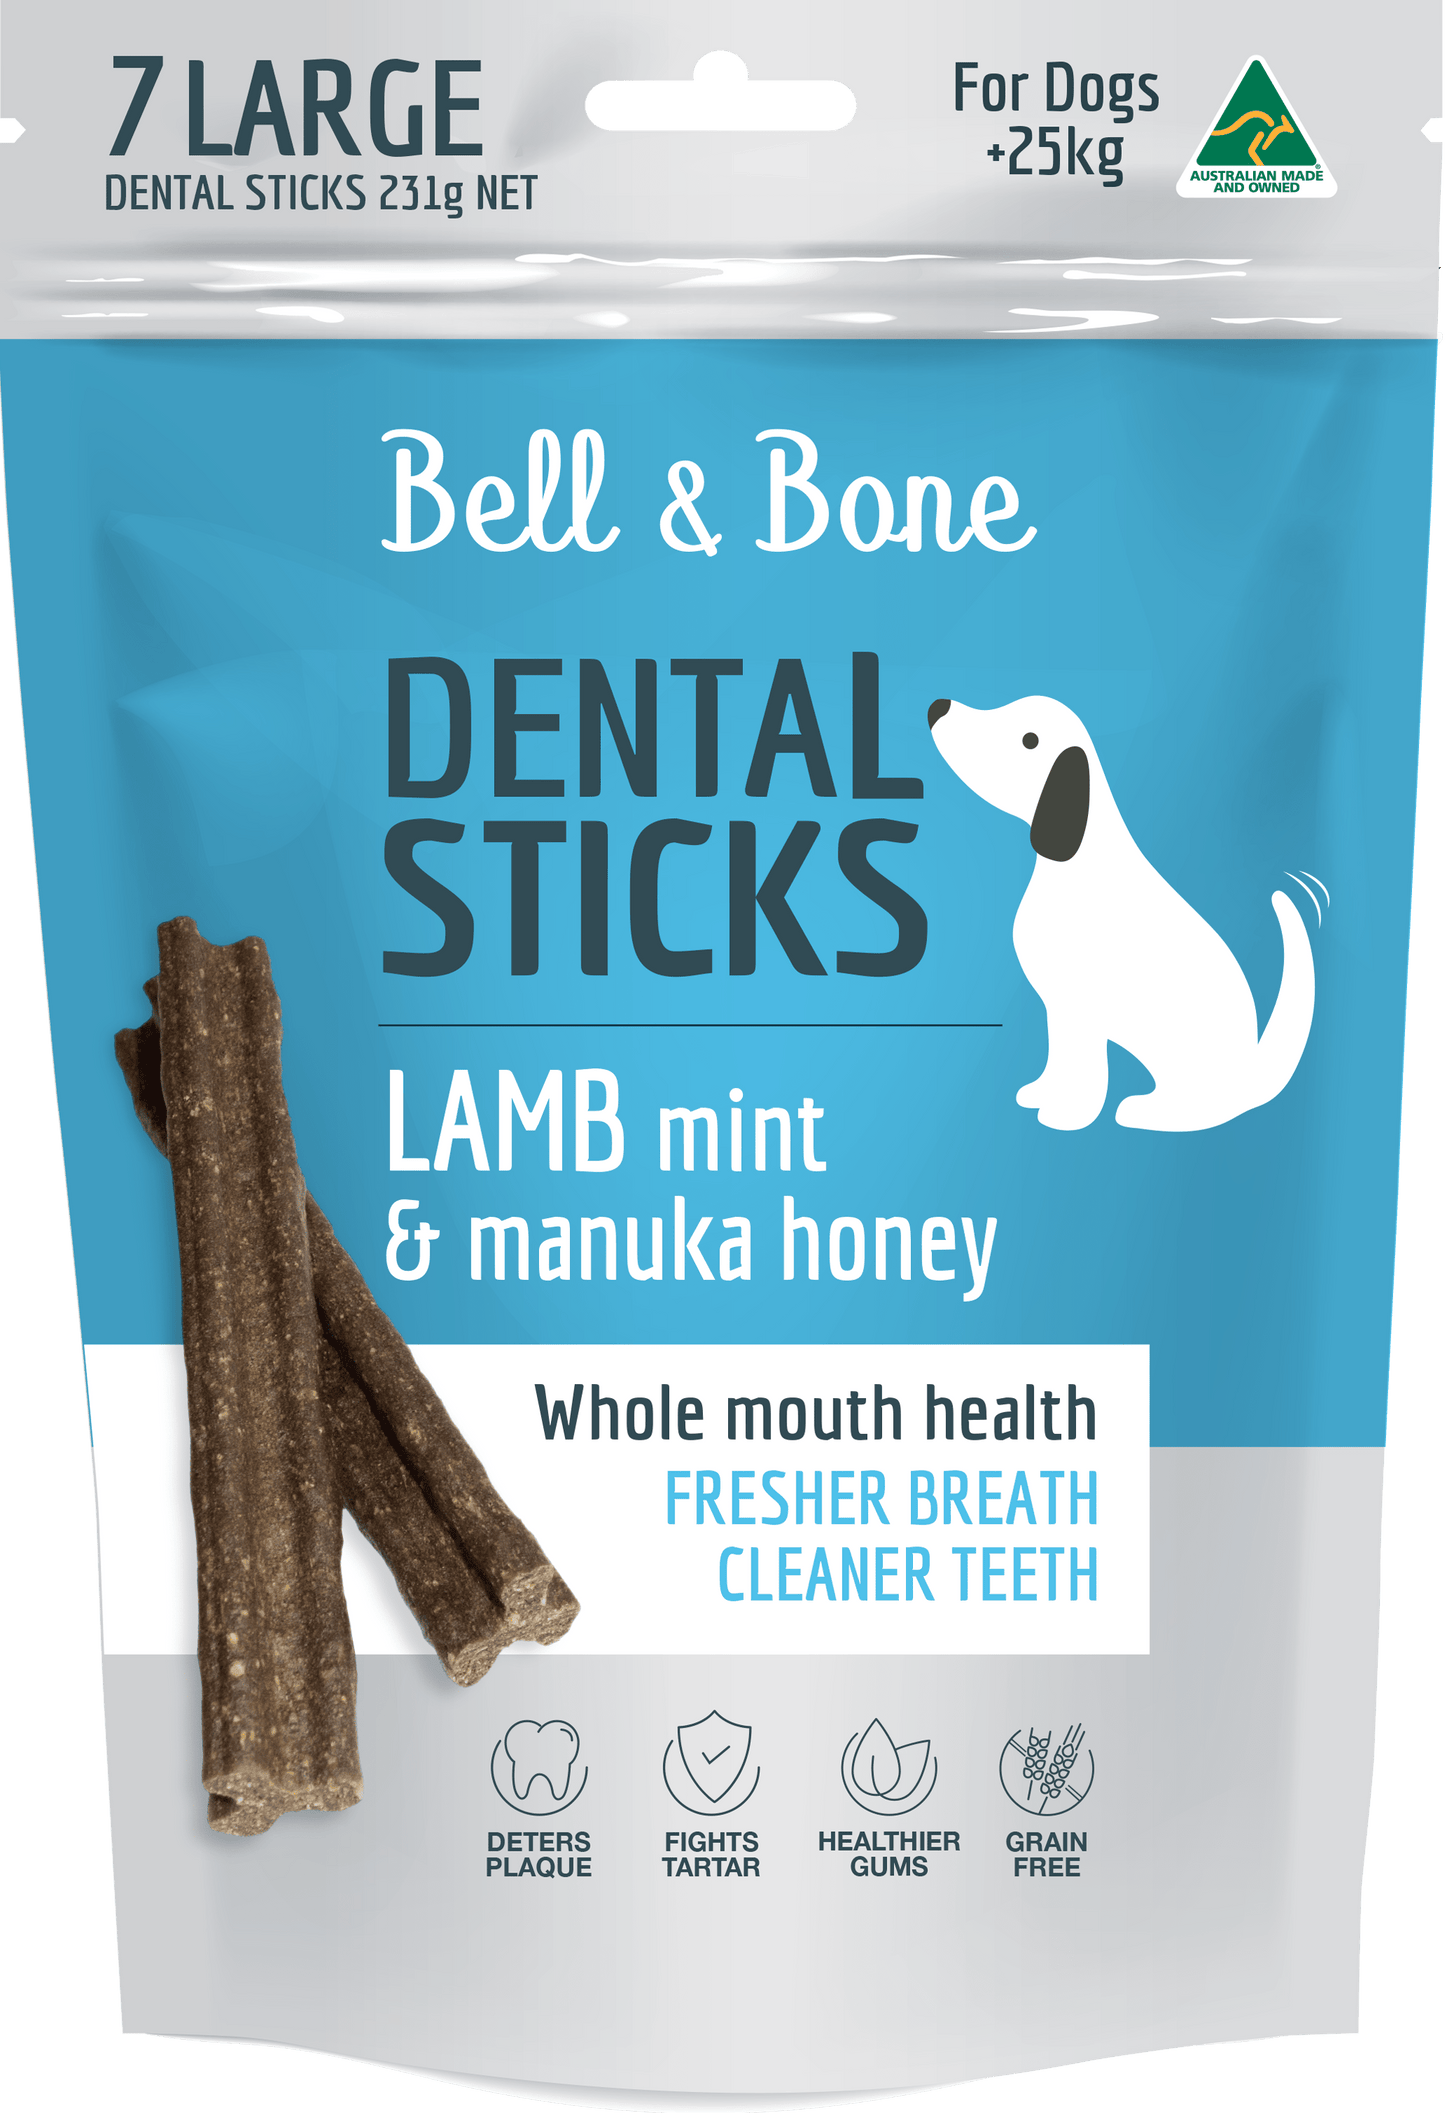 Bell and Bone Dental - Lamb, Mint, and Manuka Honey